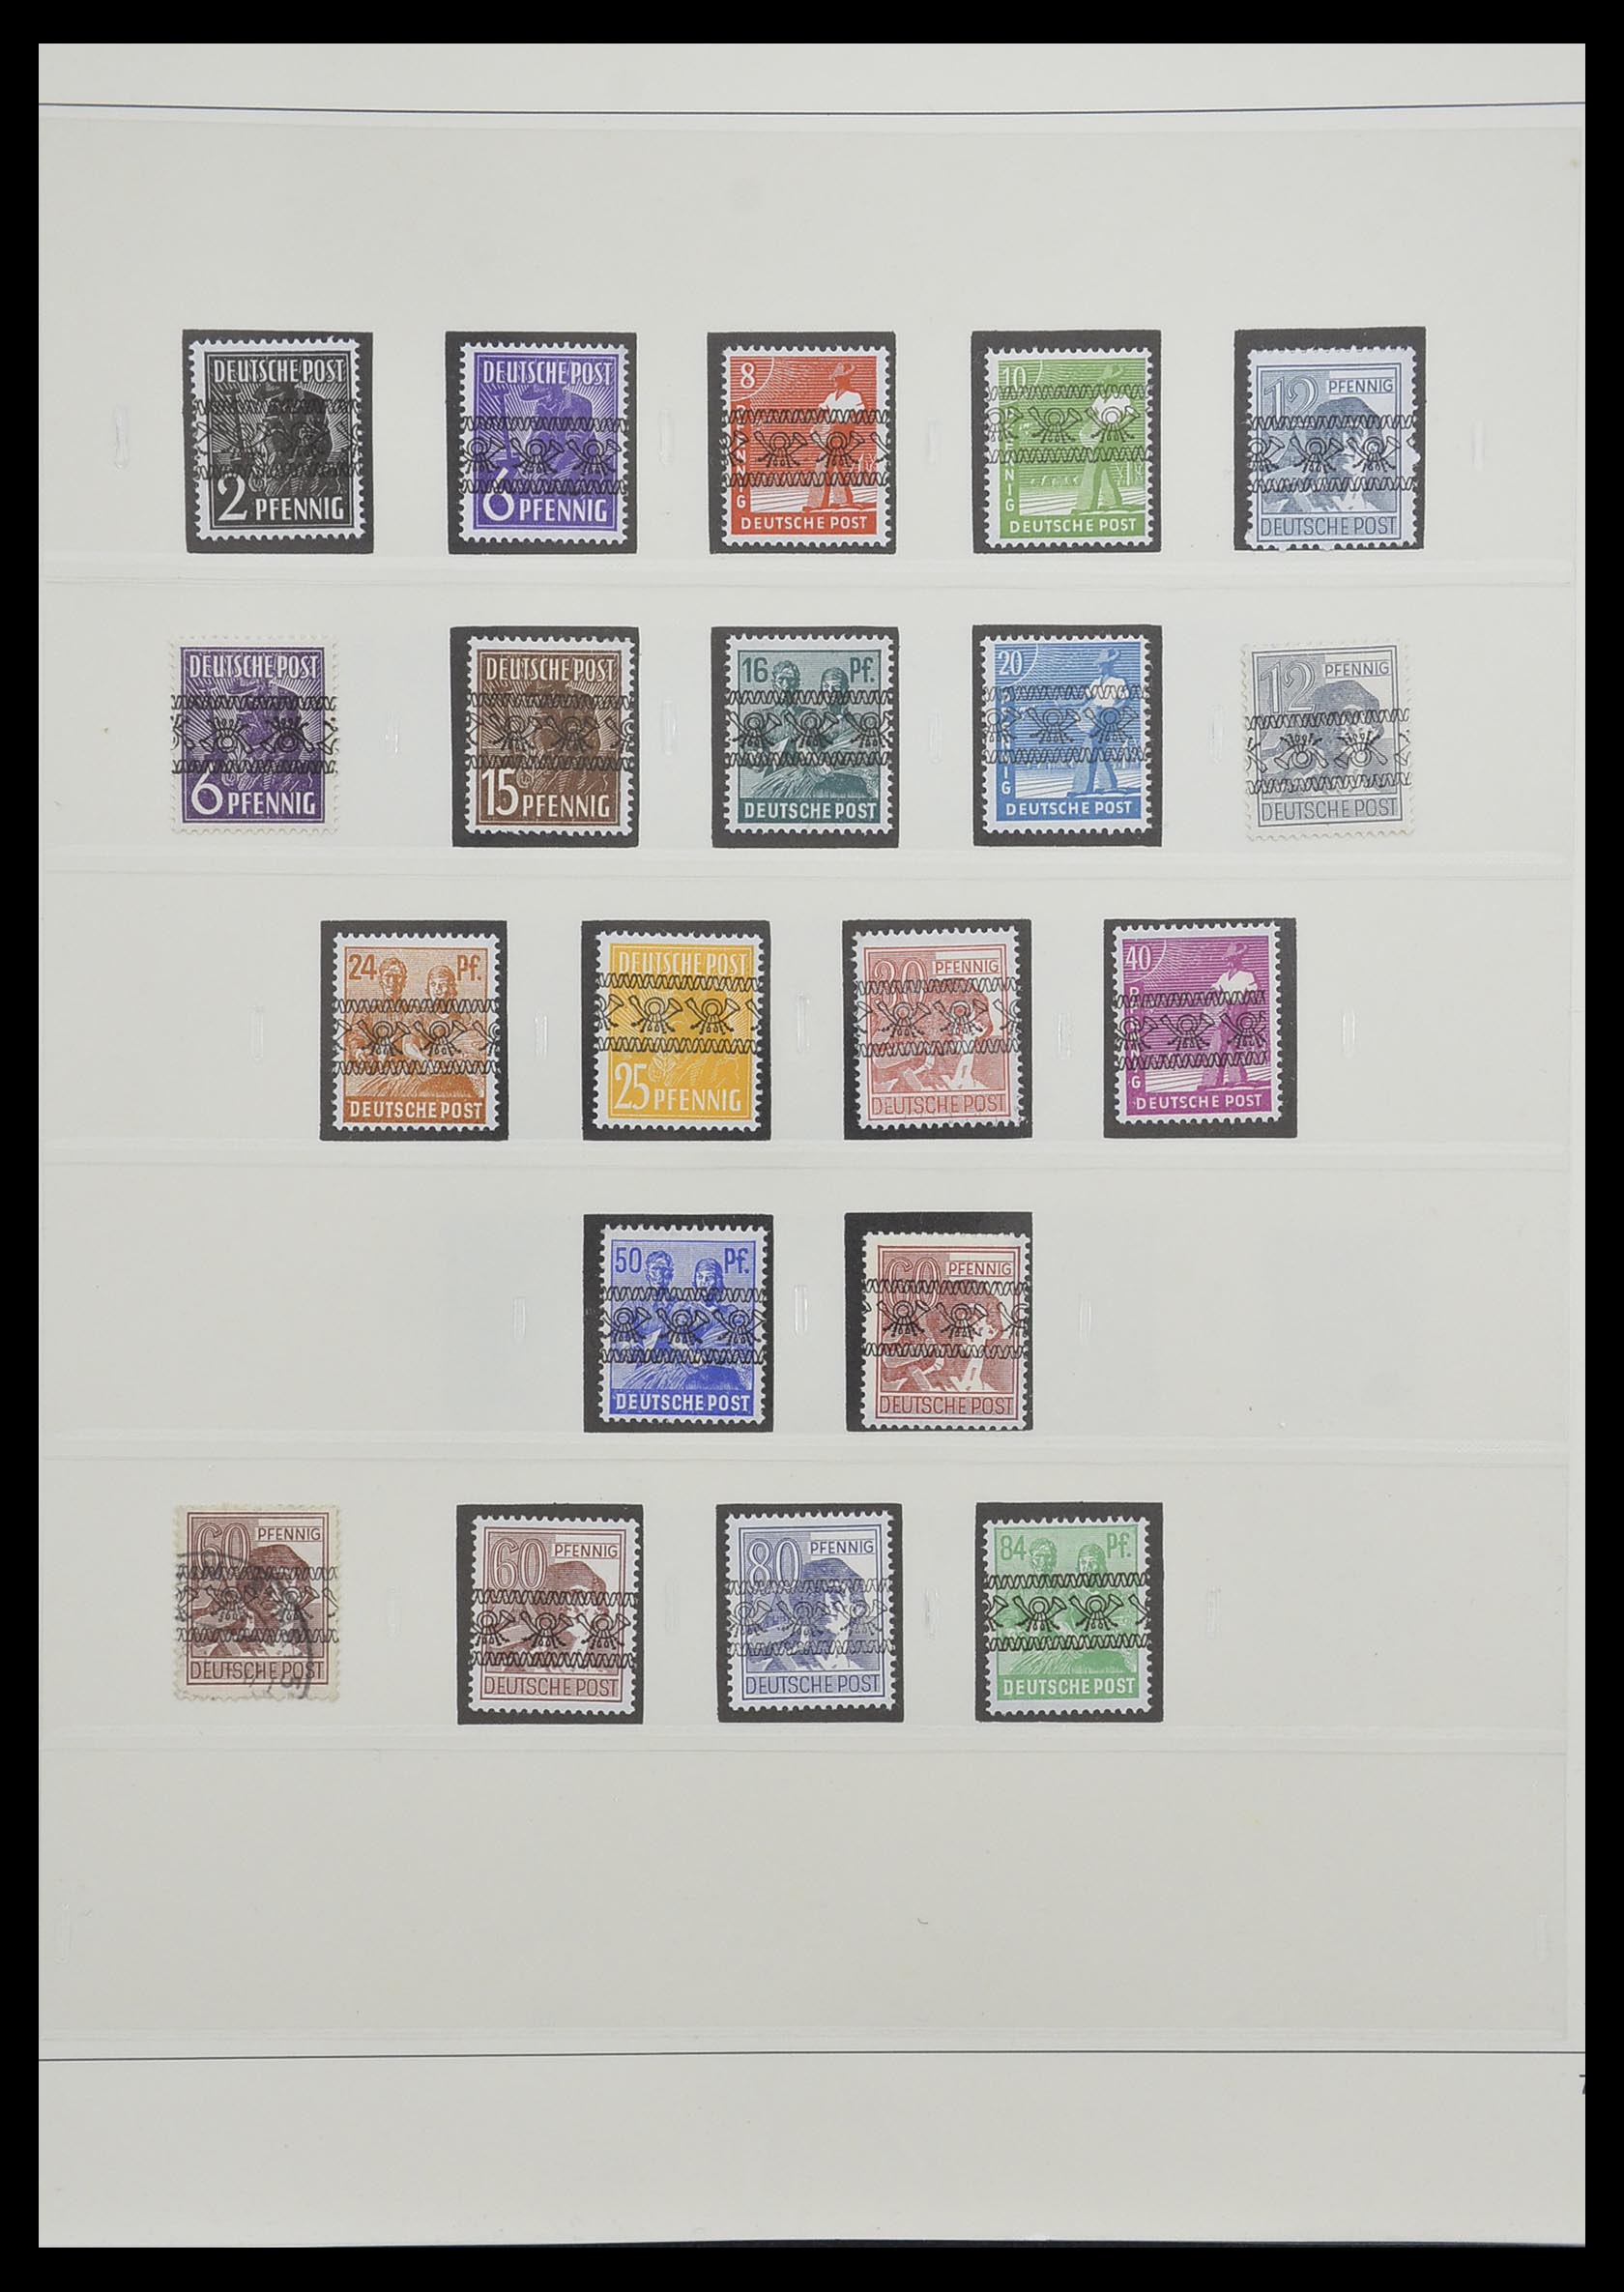 33208 007 - Stamp collection 33208 German Zones 1945-1949.